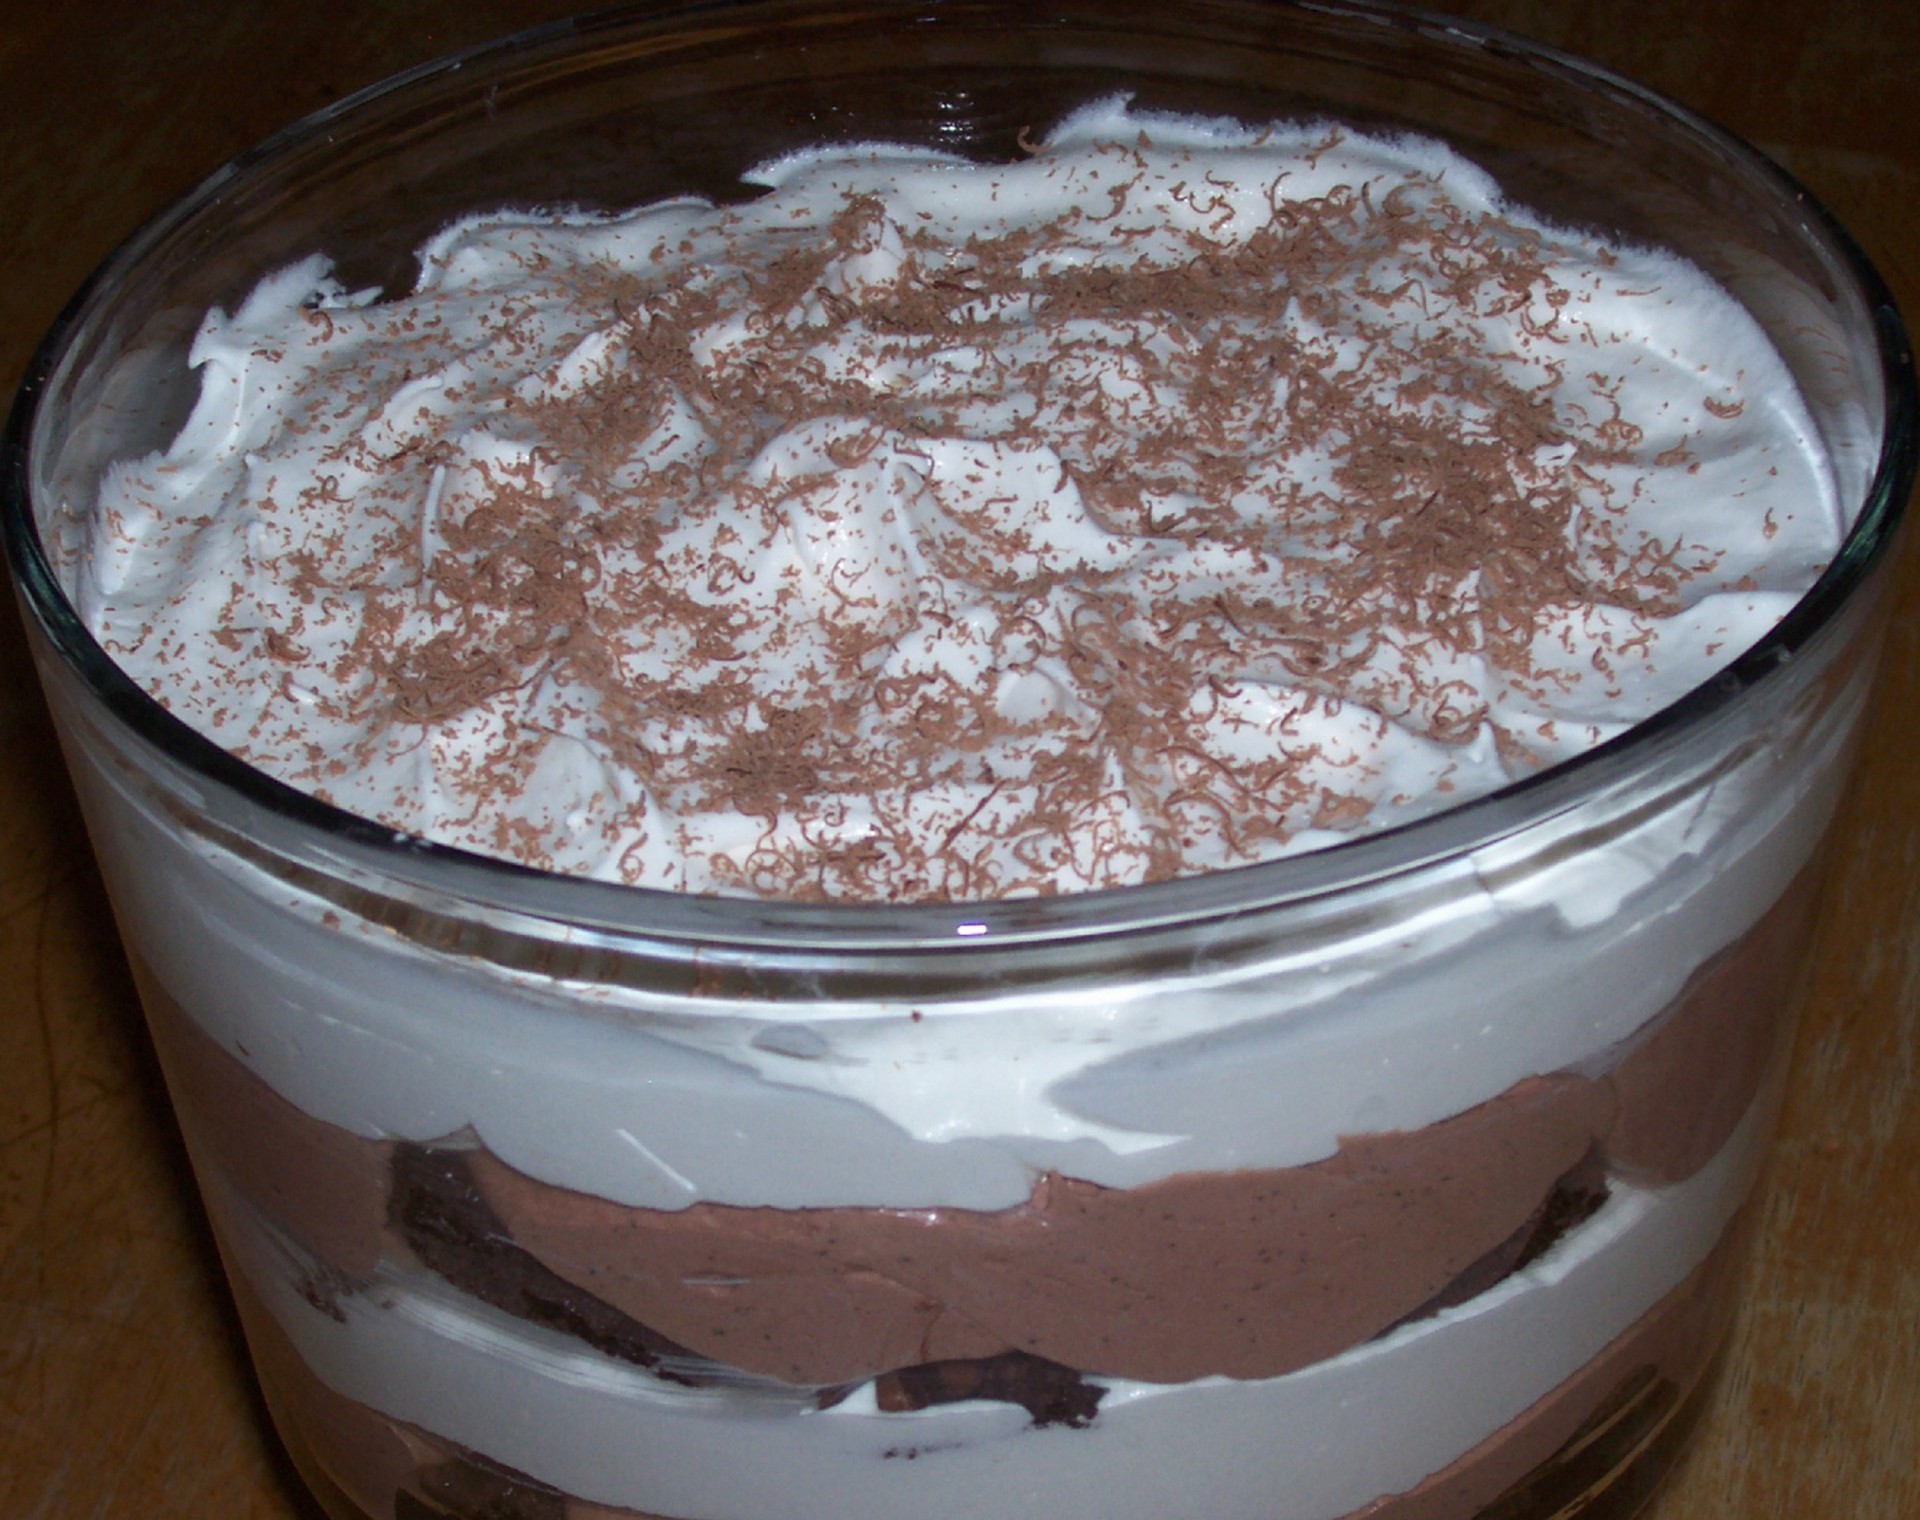 Raspberry Chocolate Trifle